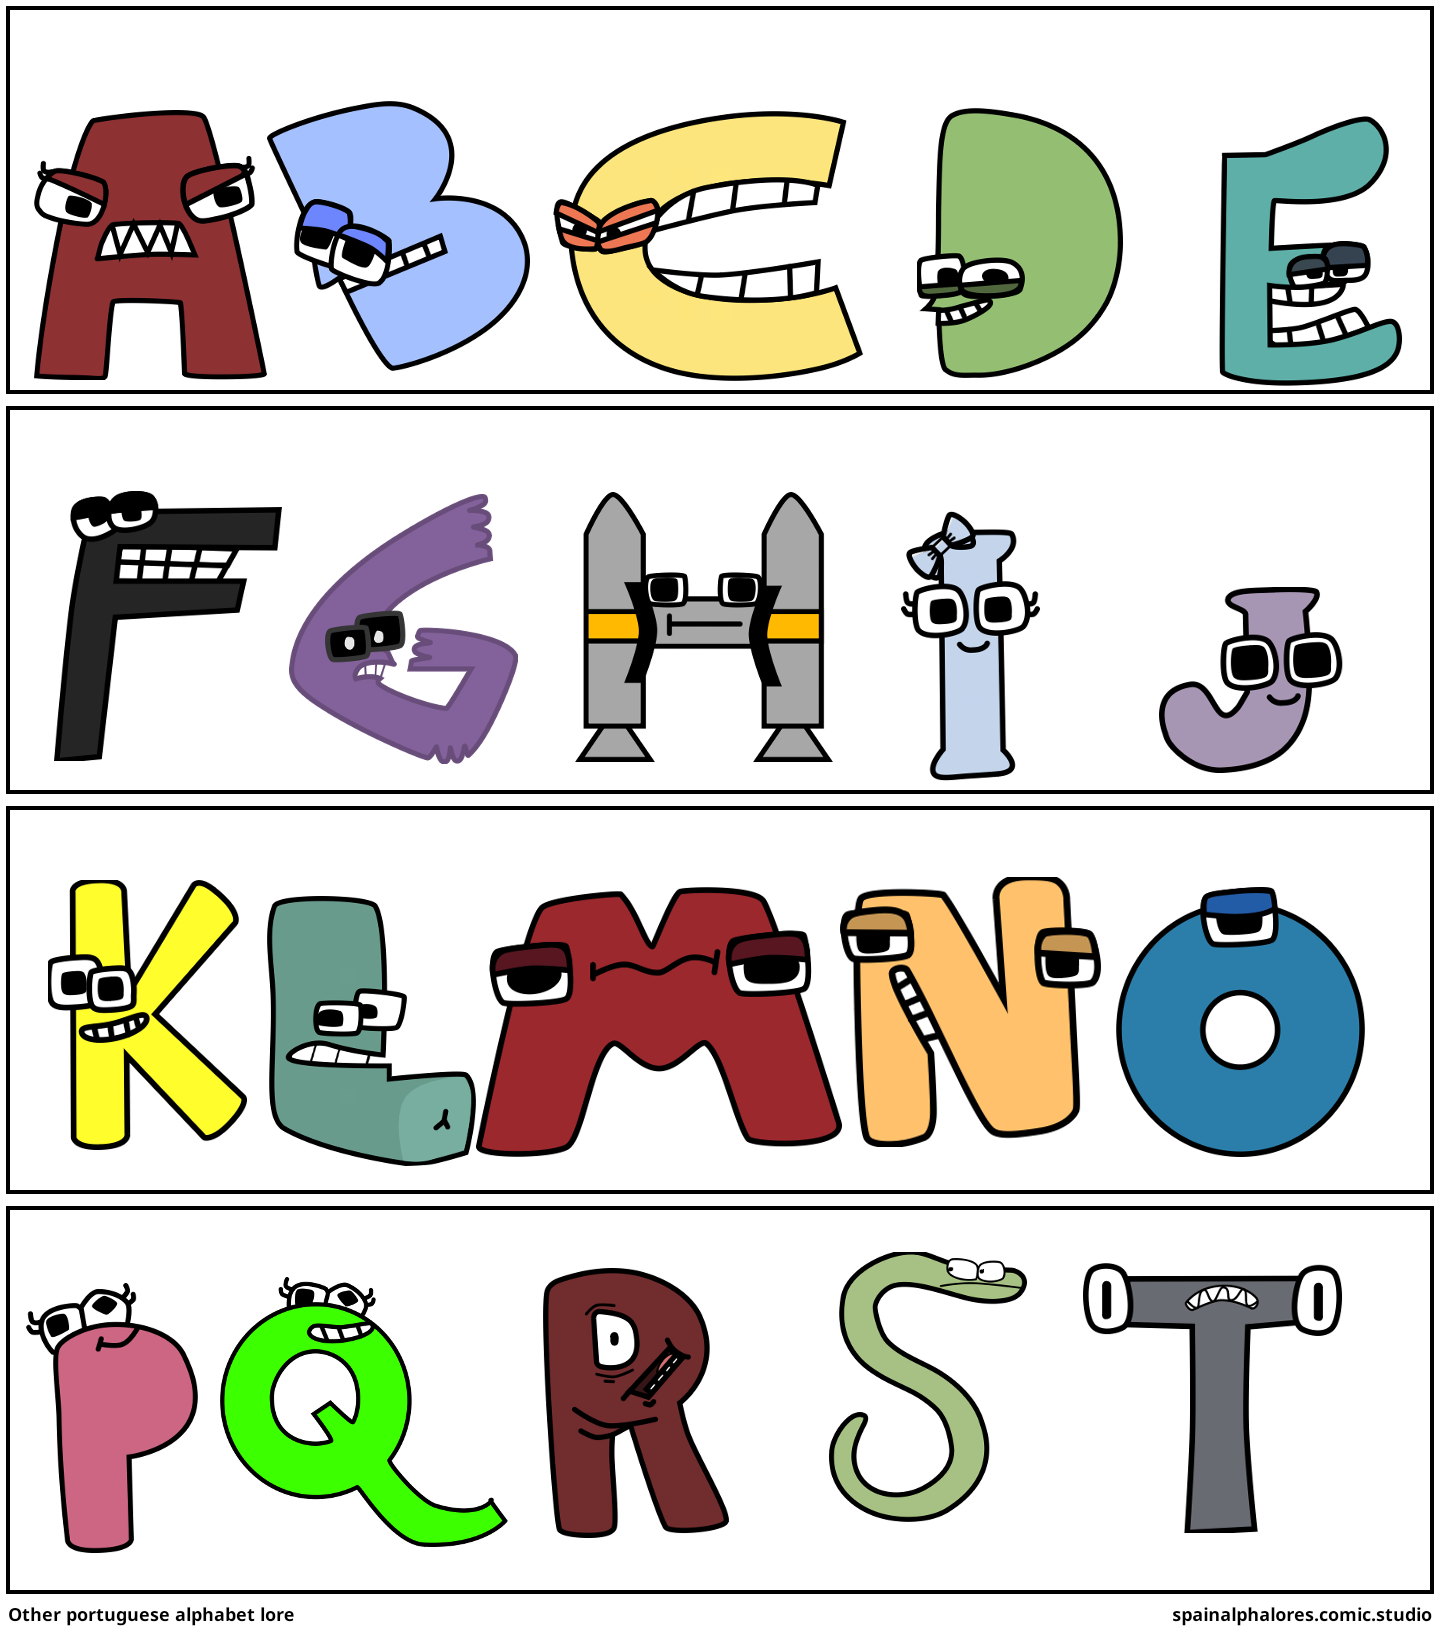 Other portuguese alphabet lore - Comic Studio